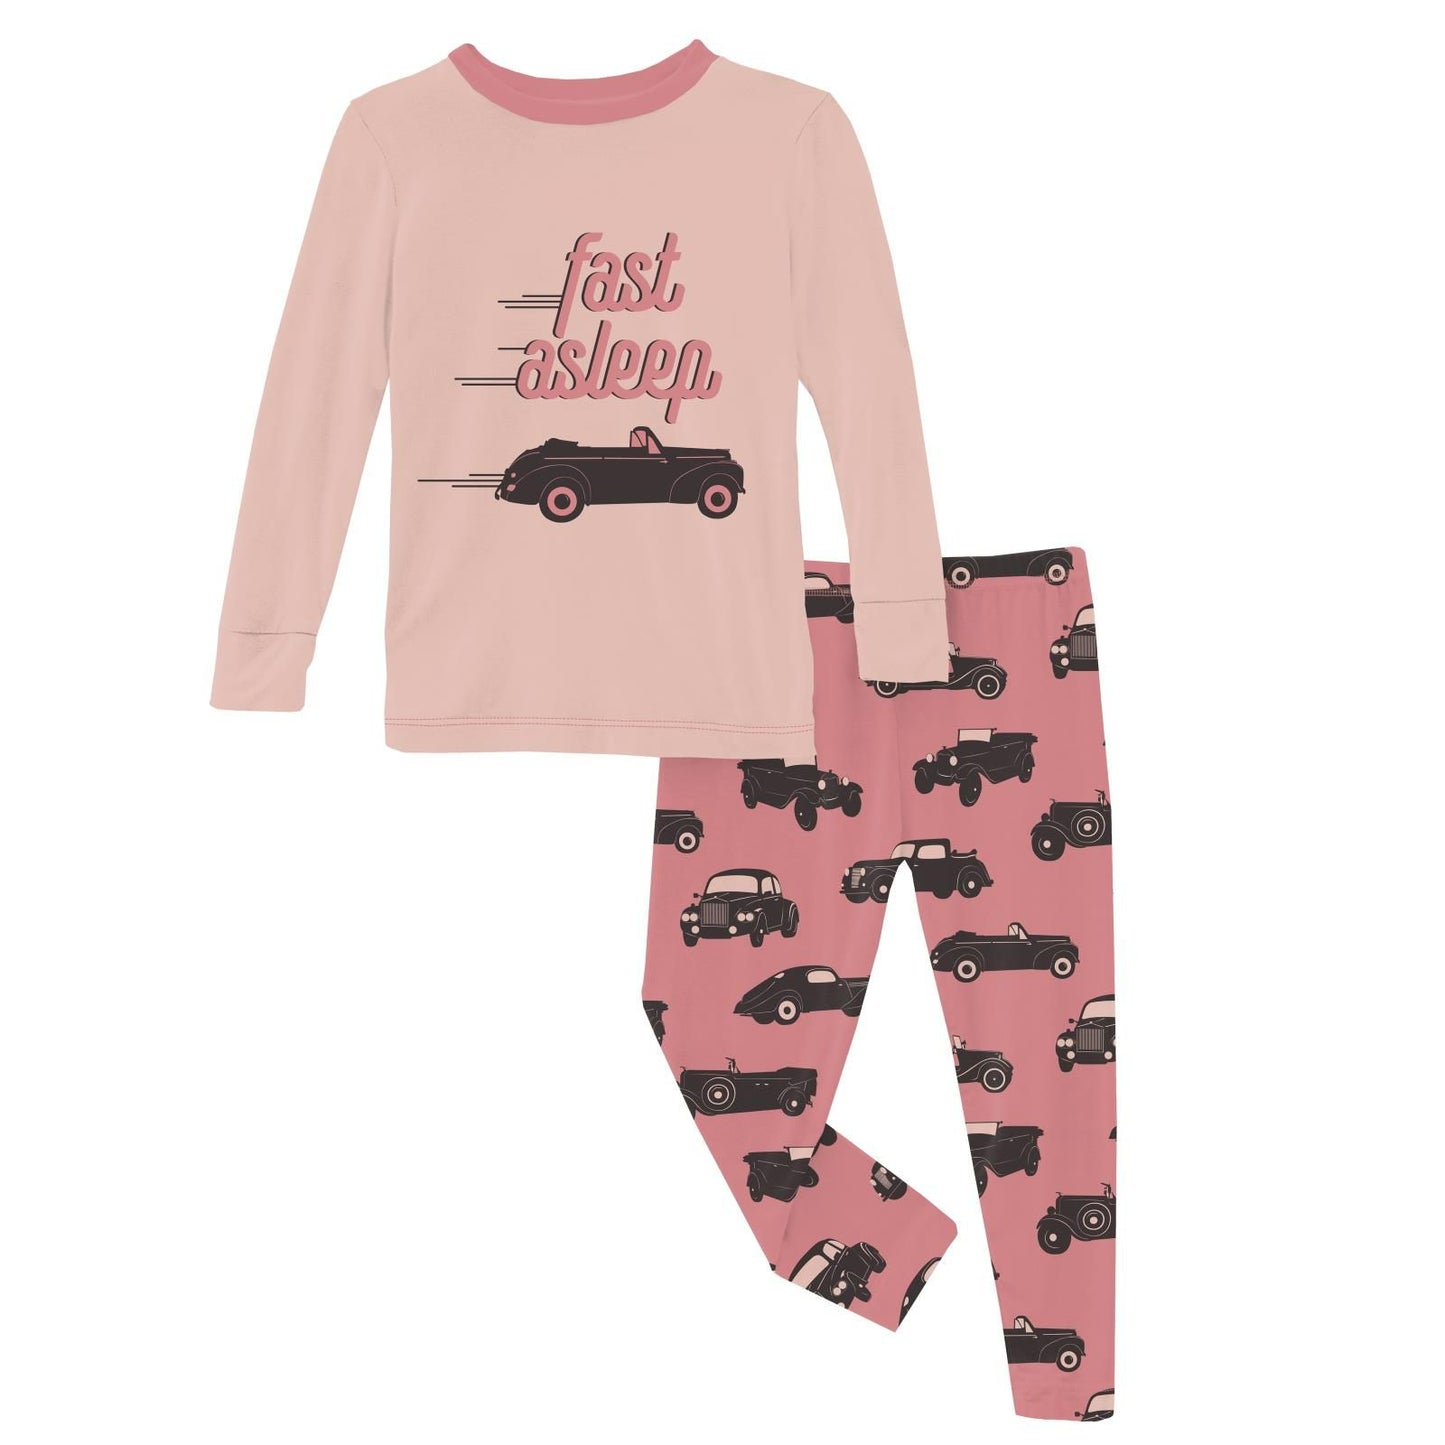 2 Piece Pajama Set (Long Sleeve) - Desert Rose Vintage Cars